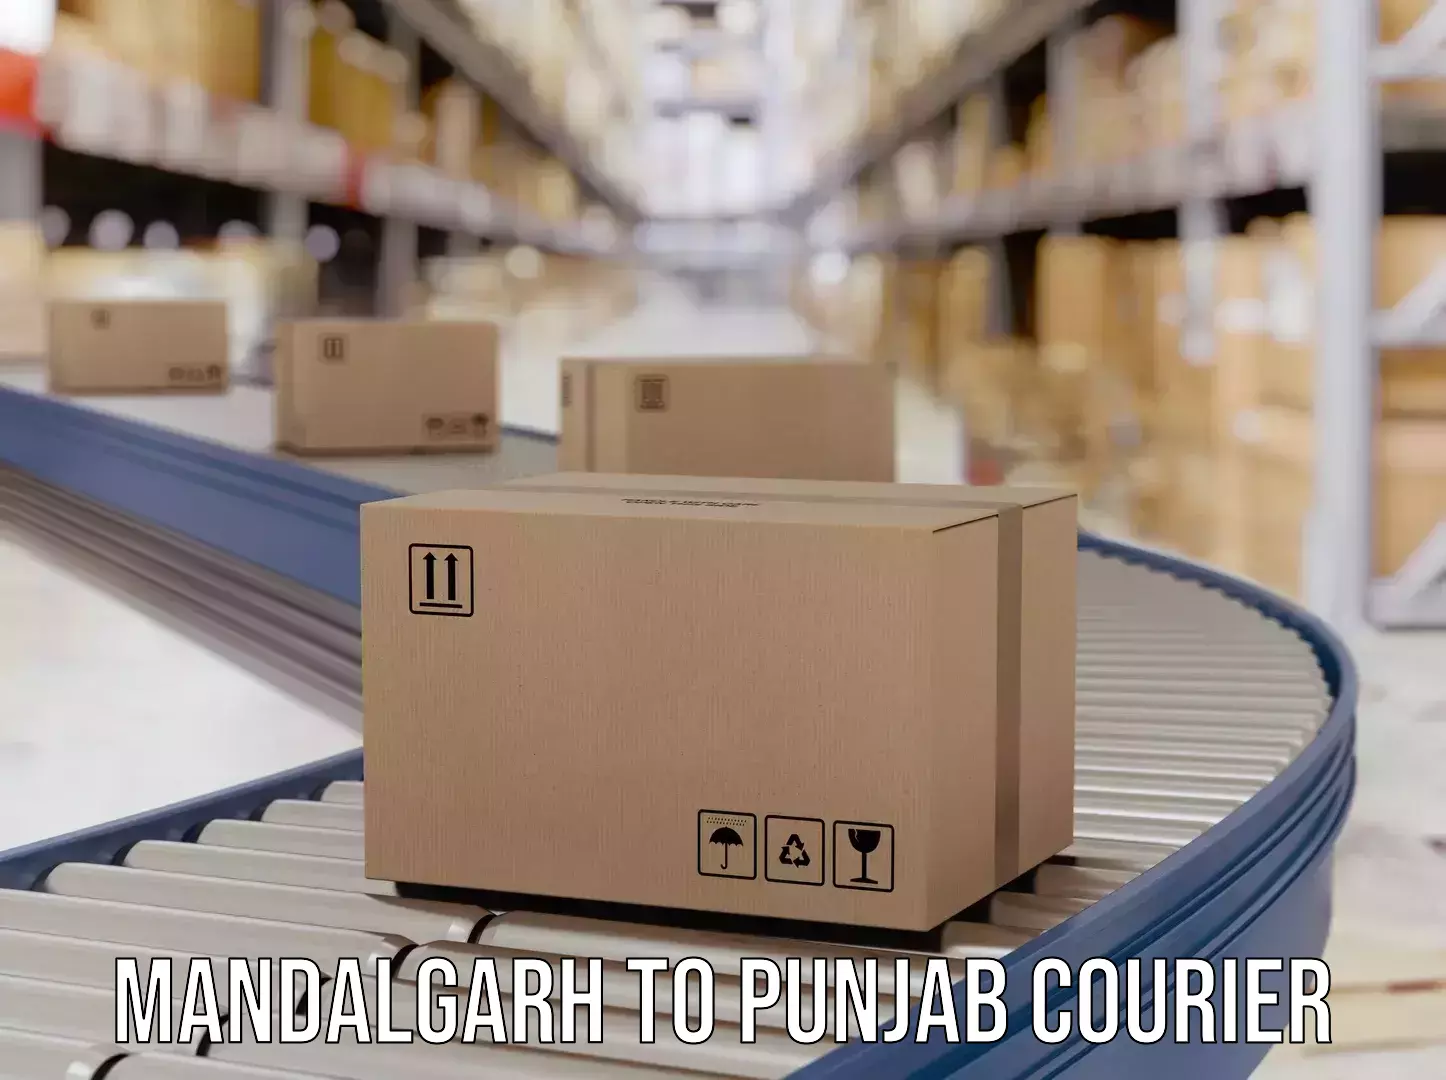 State-of-the-art courier technology Mandalgarh to Barnala